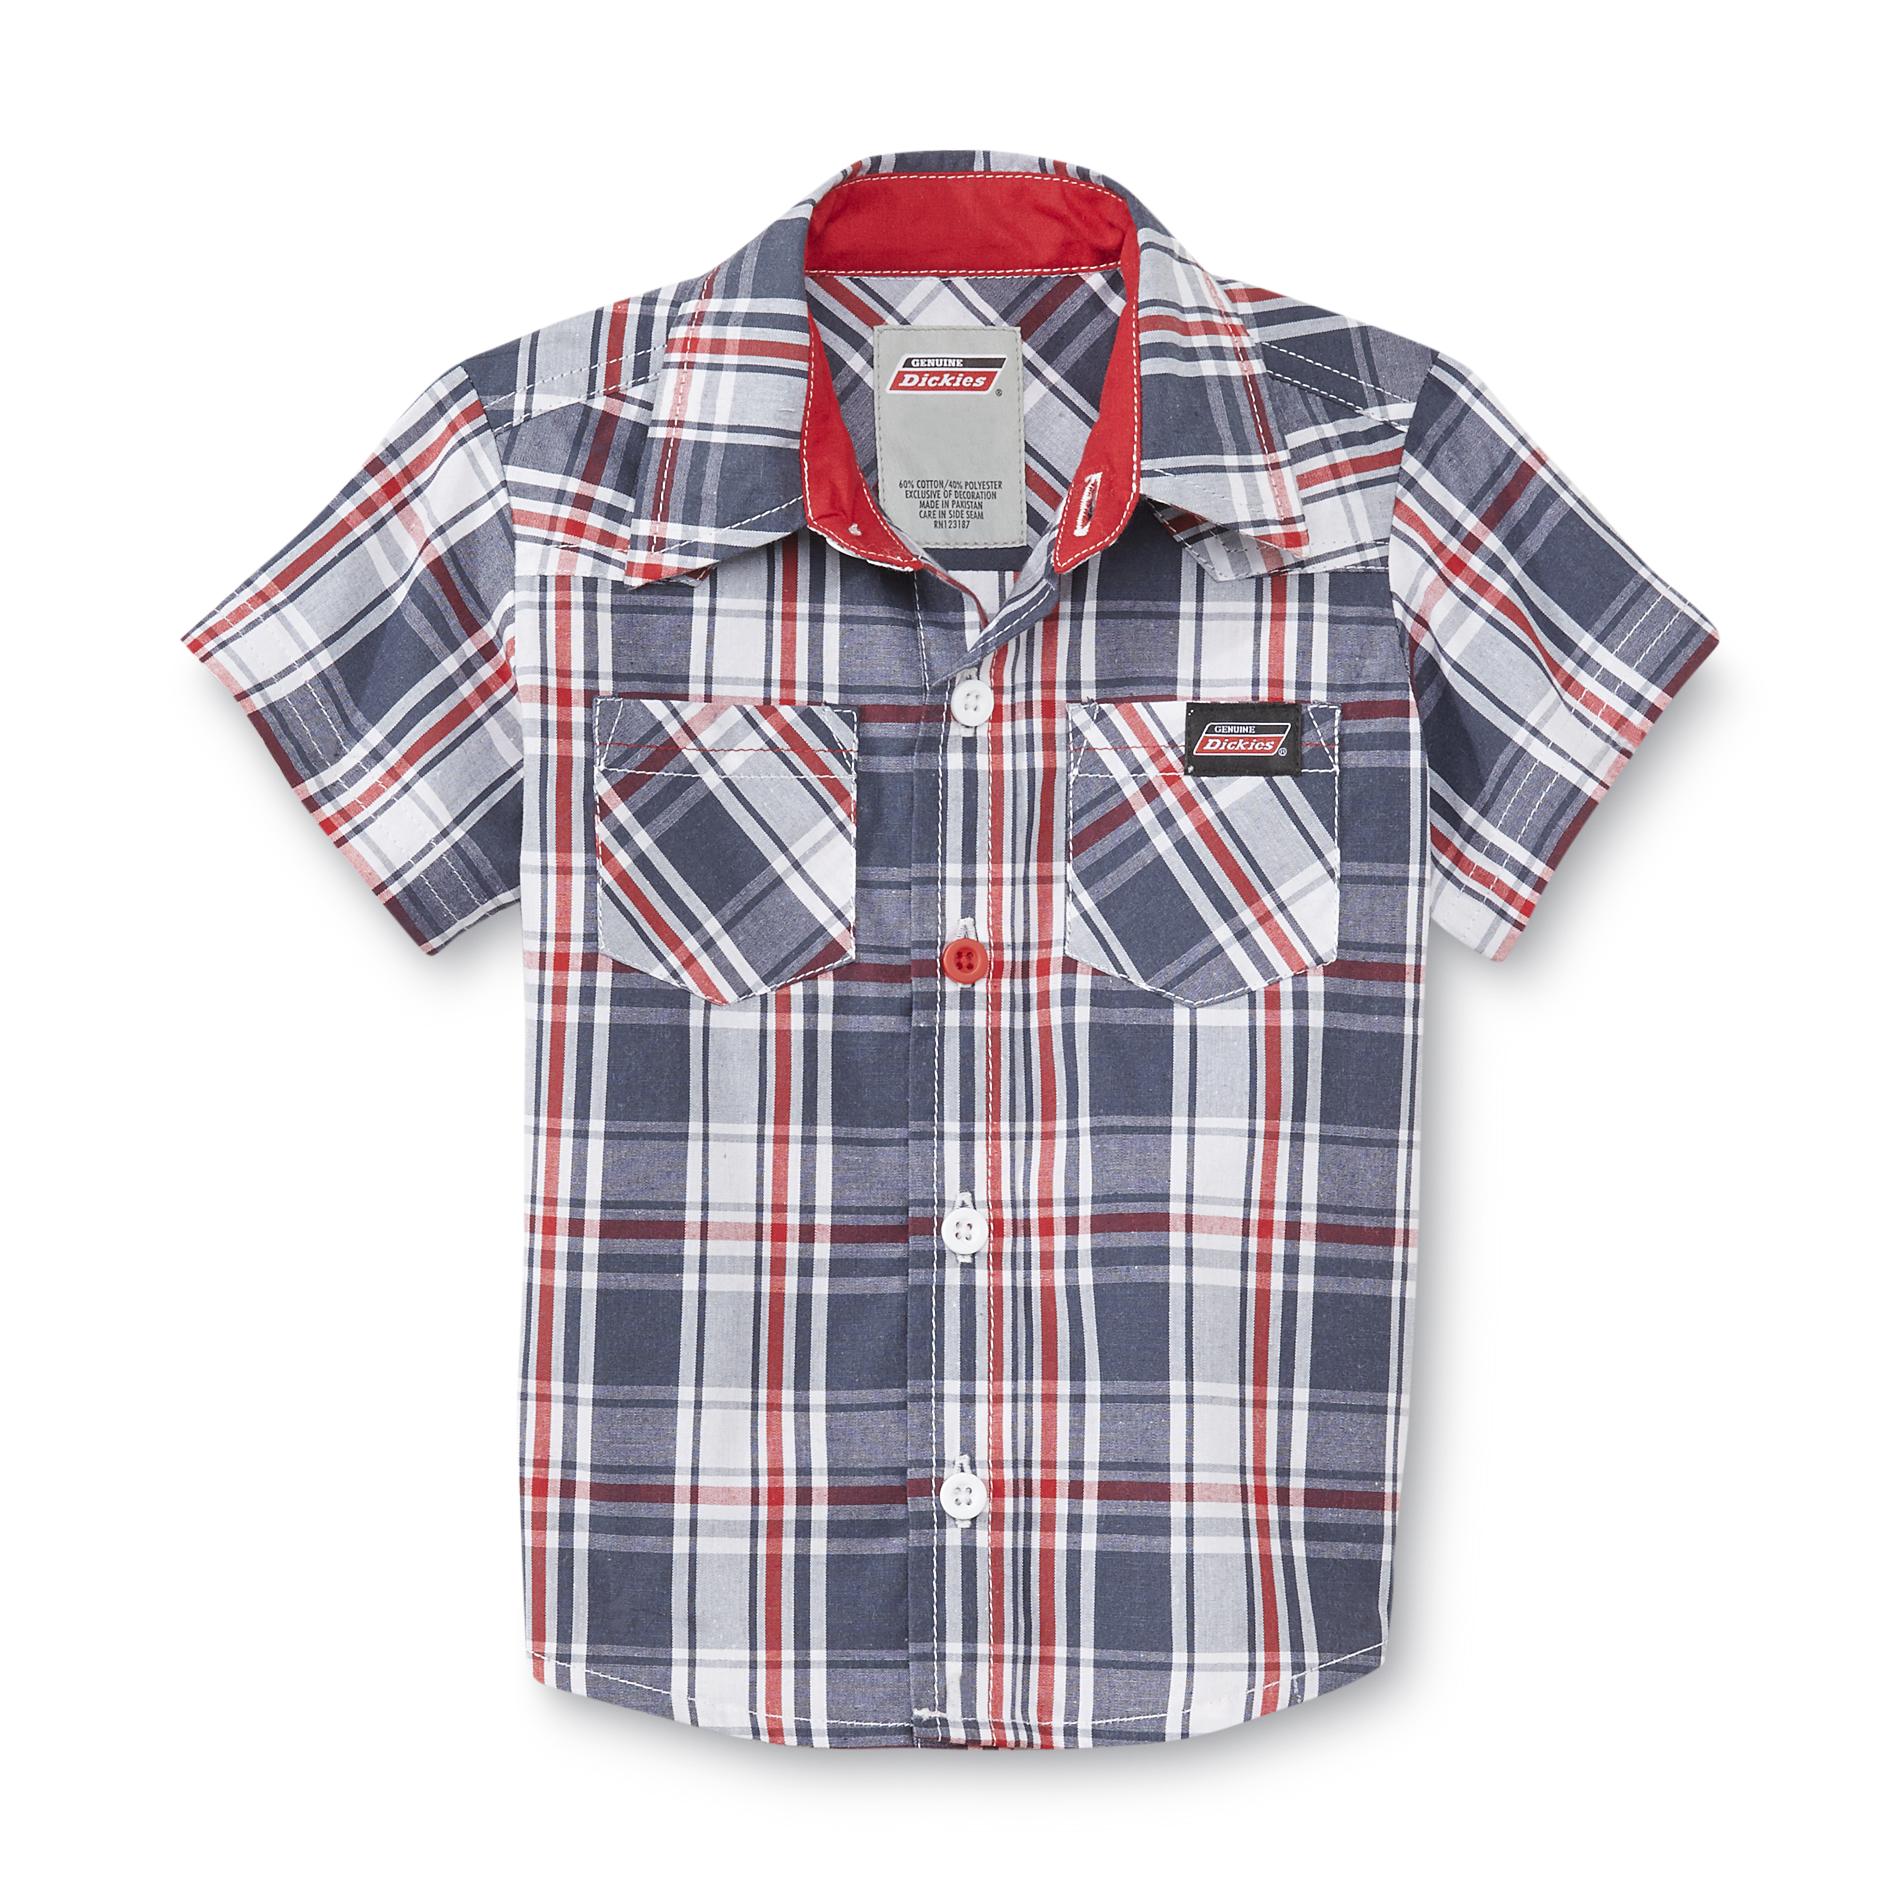 Dickies Newborn Boy's Button-Front Shirt - Plaid